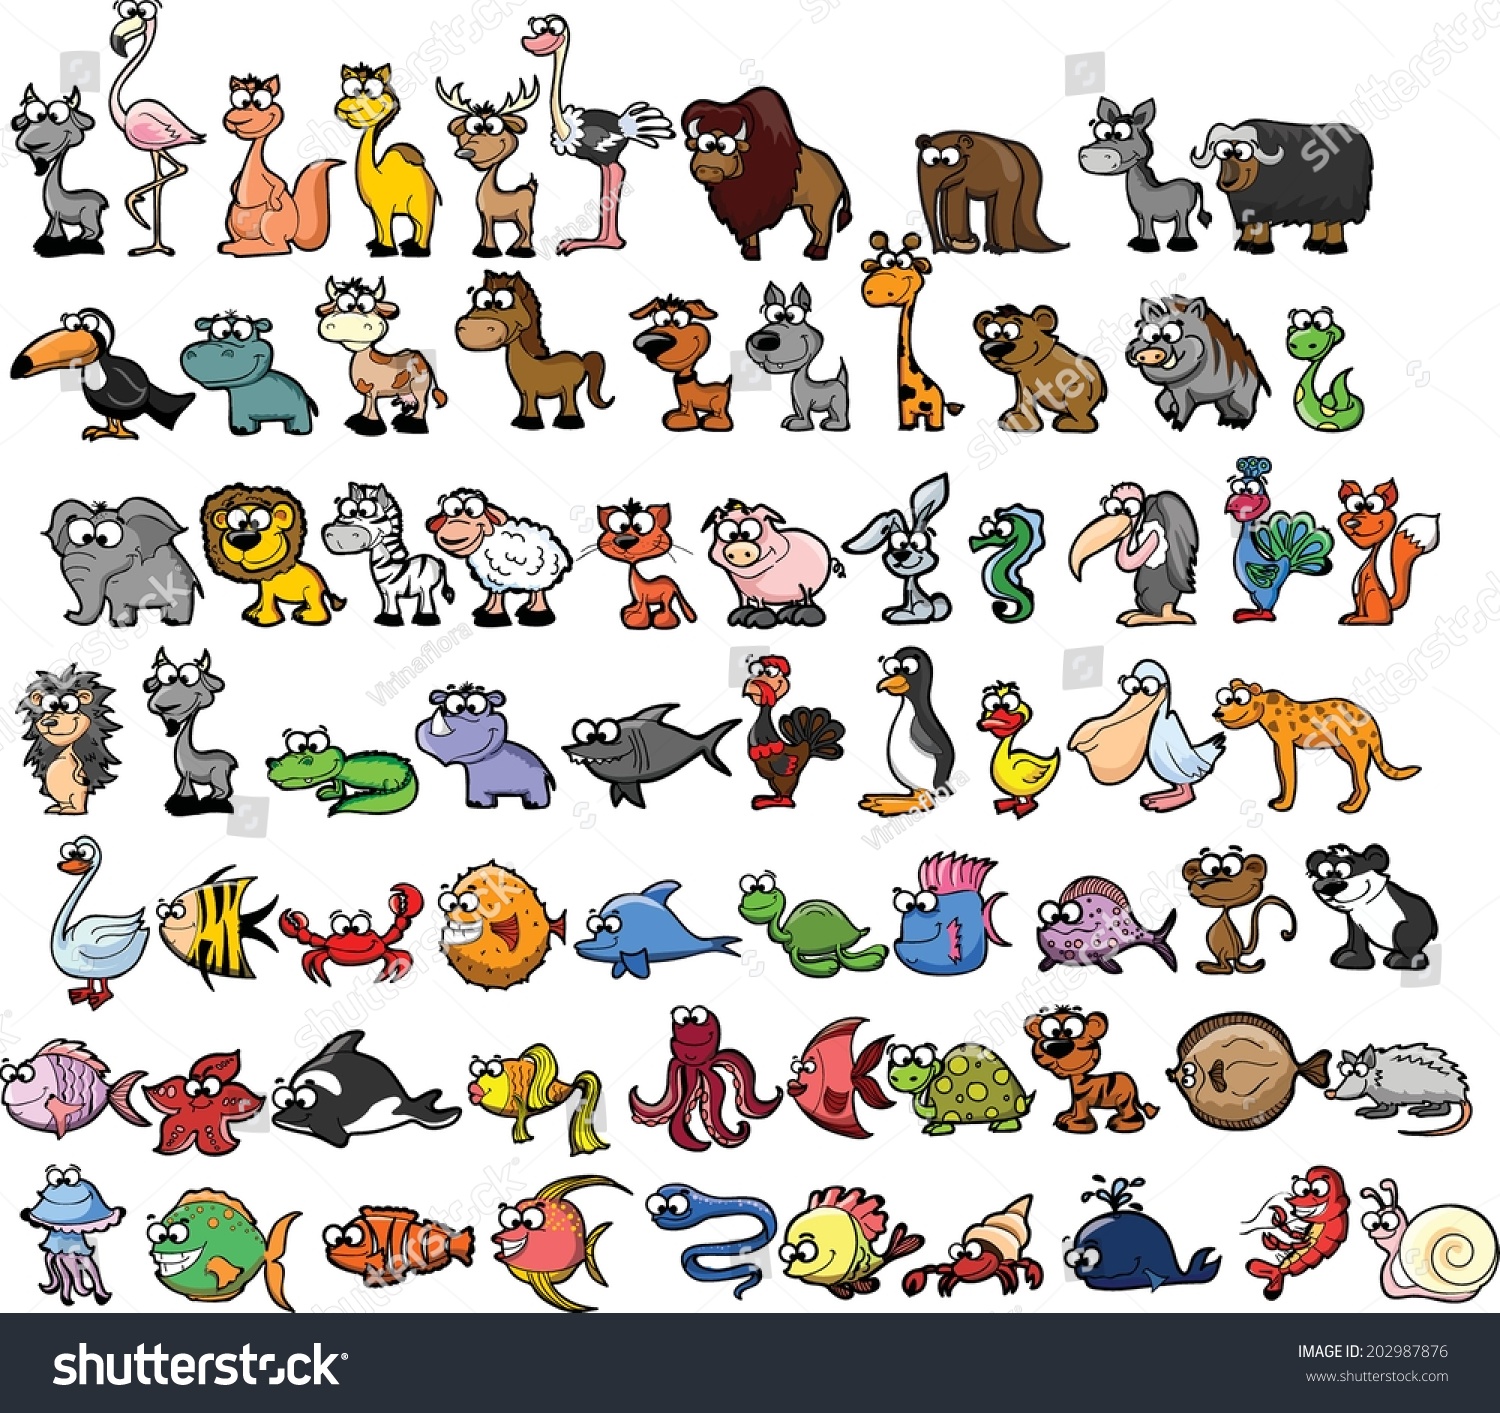 Set Of Cute Cartoon Animals Stock Vector Illustration 202987876